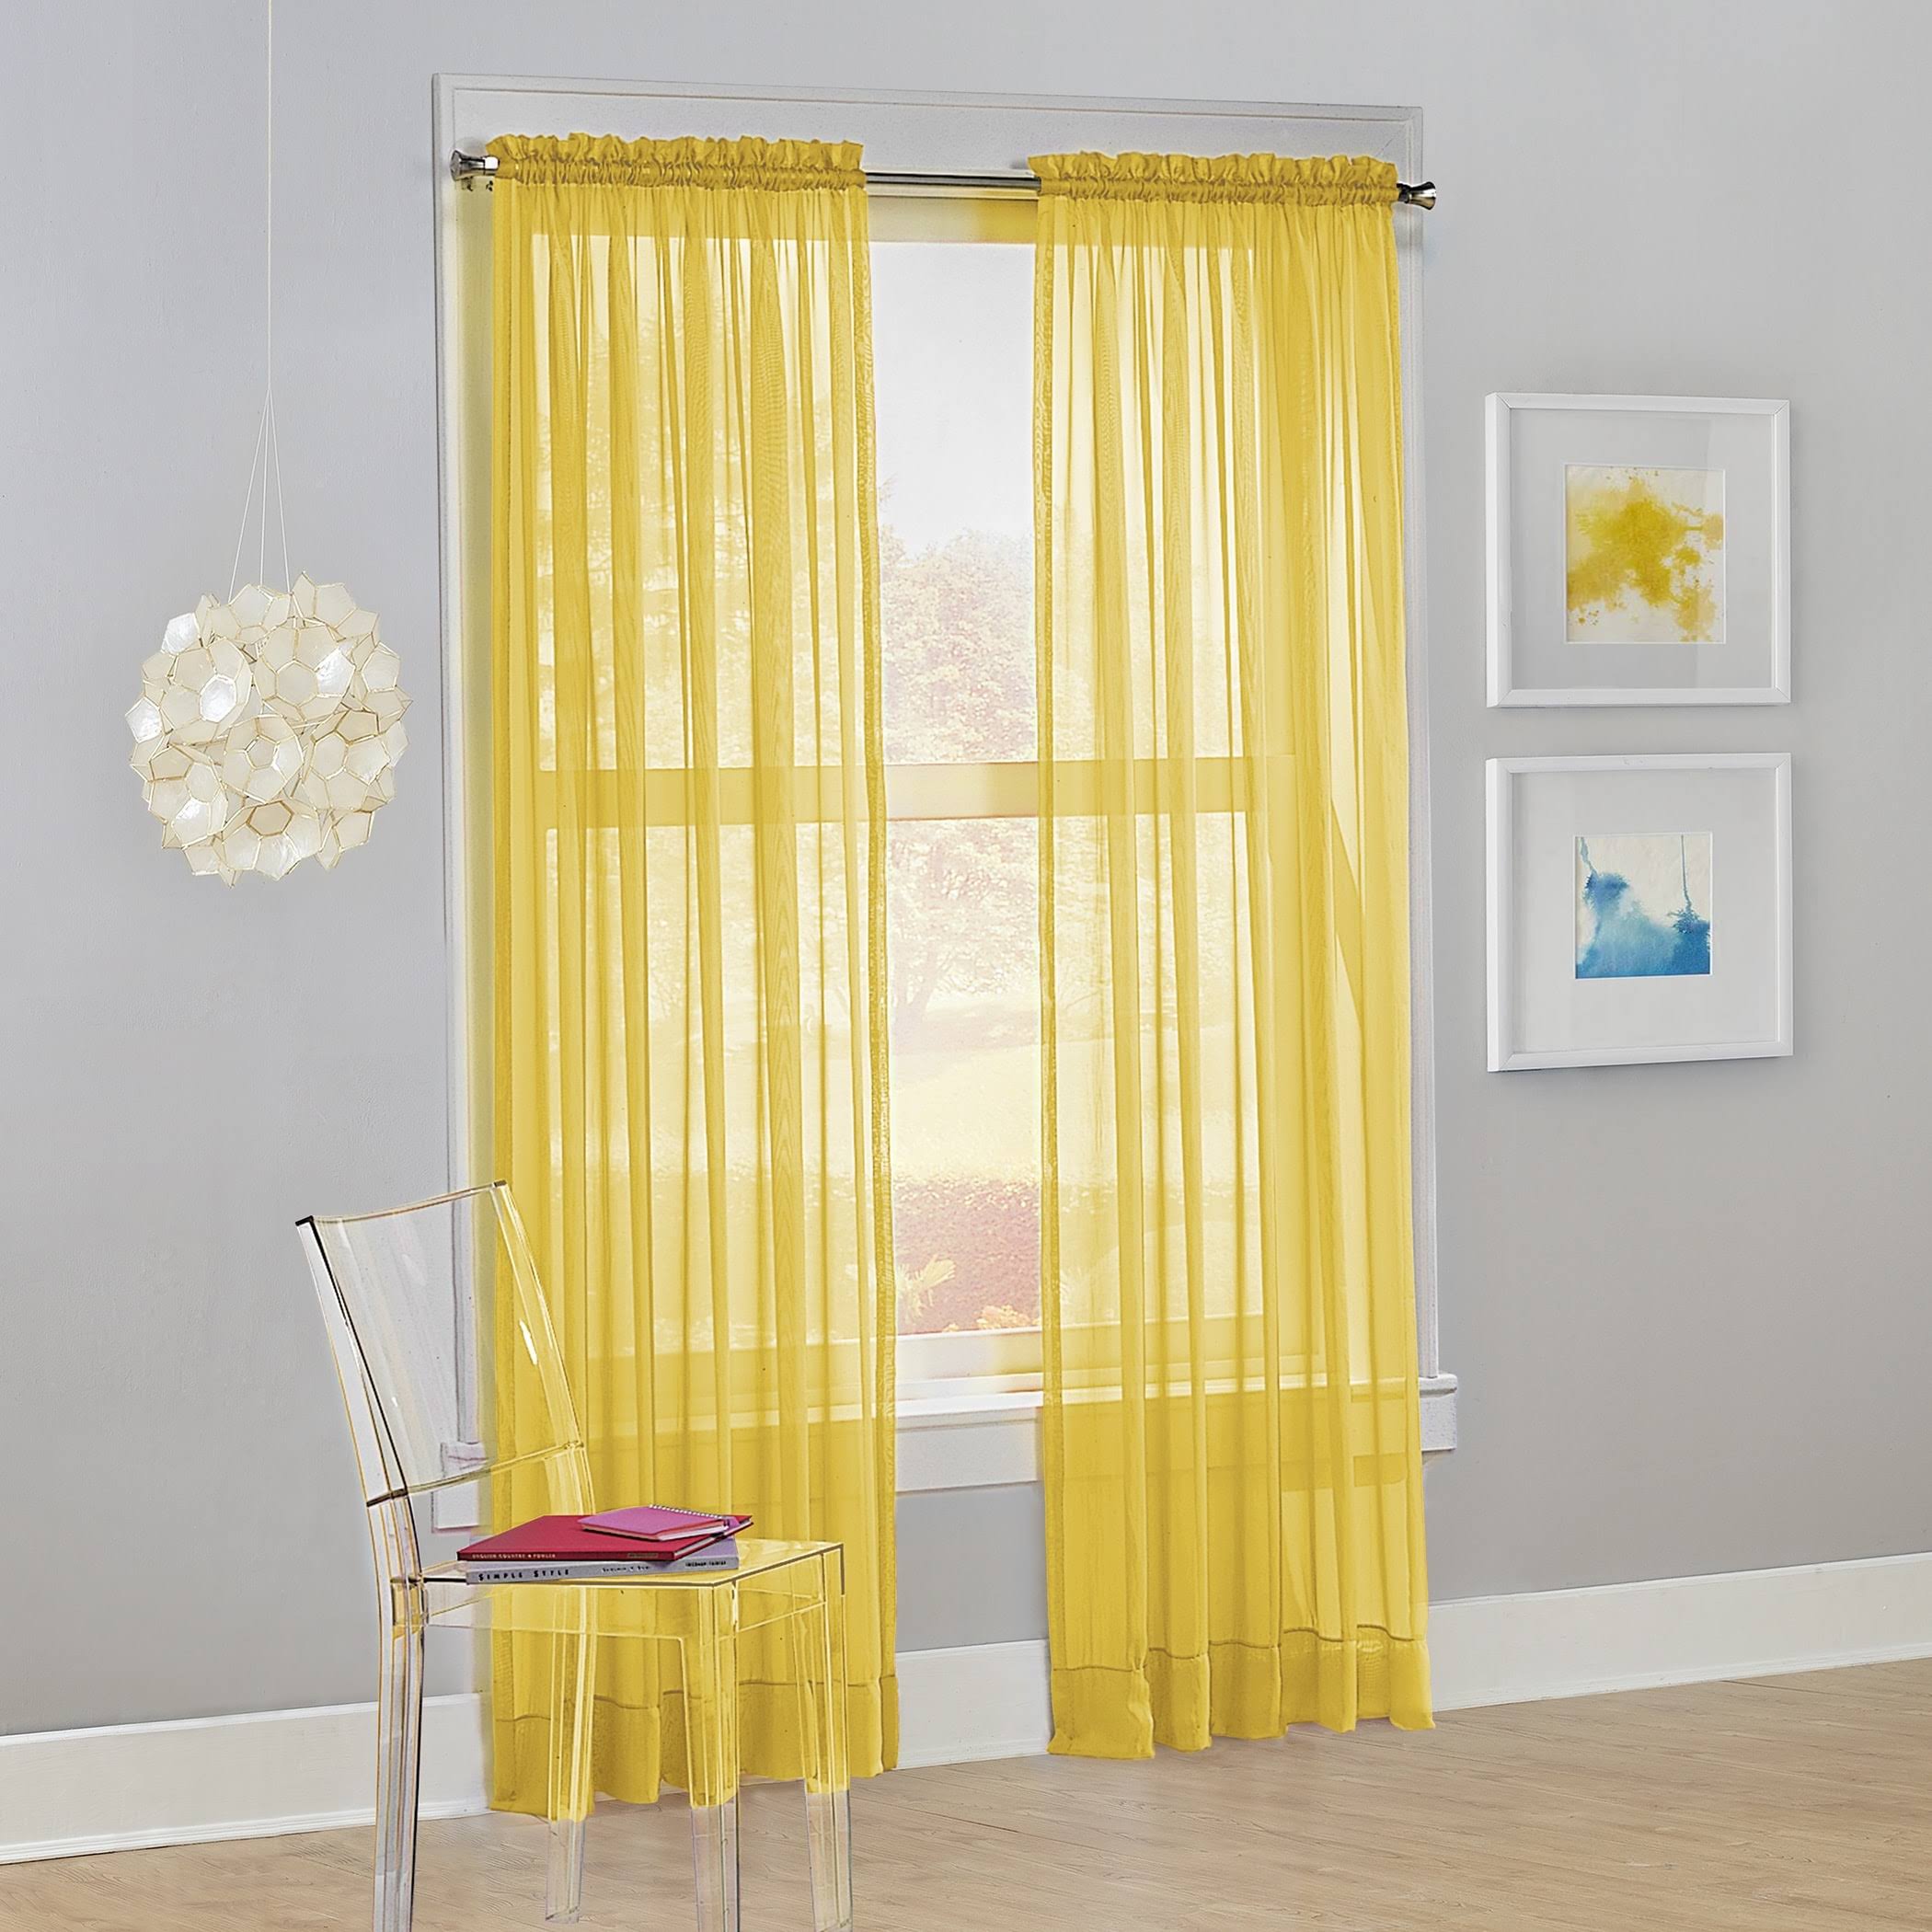 No. 918 Calypso Sheer Voile Rod Pocket Curtain Panel, 59" x 84", Lemon